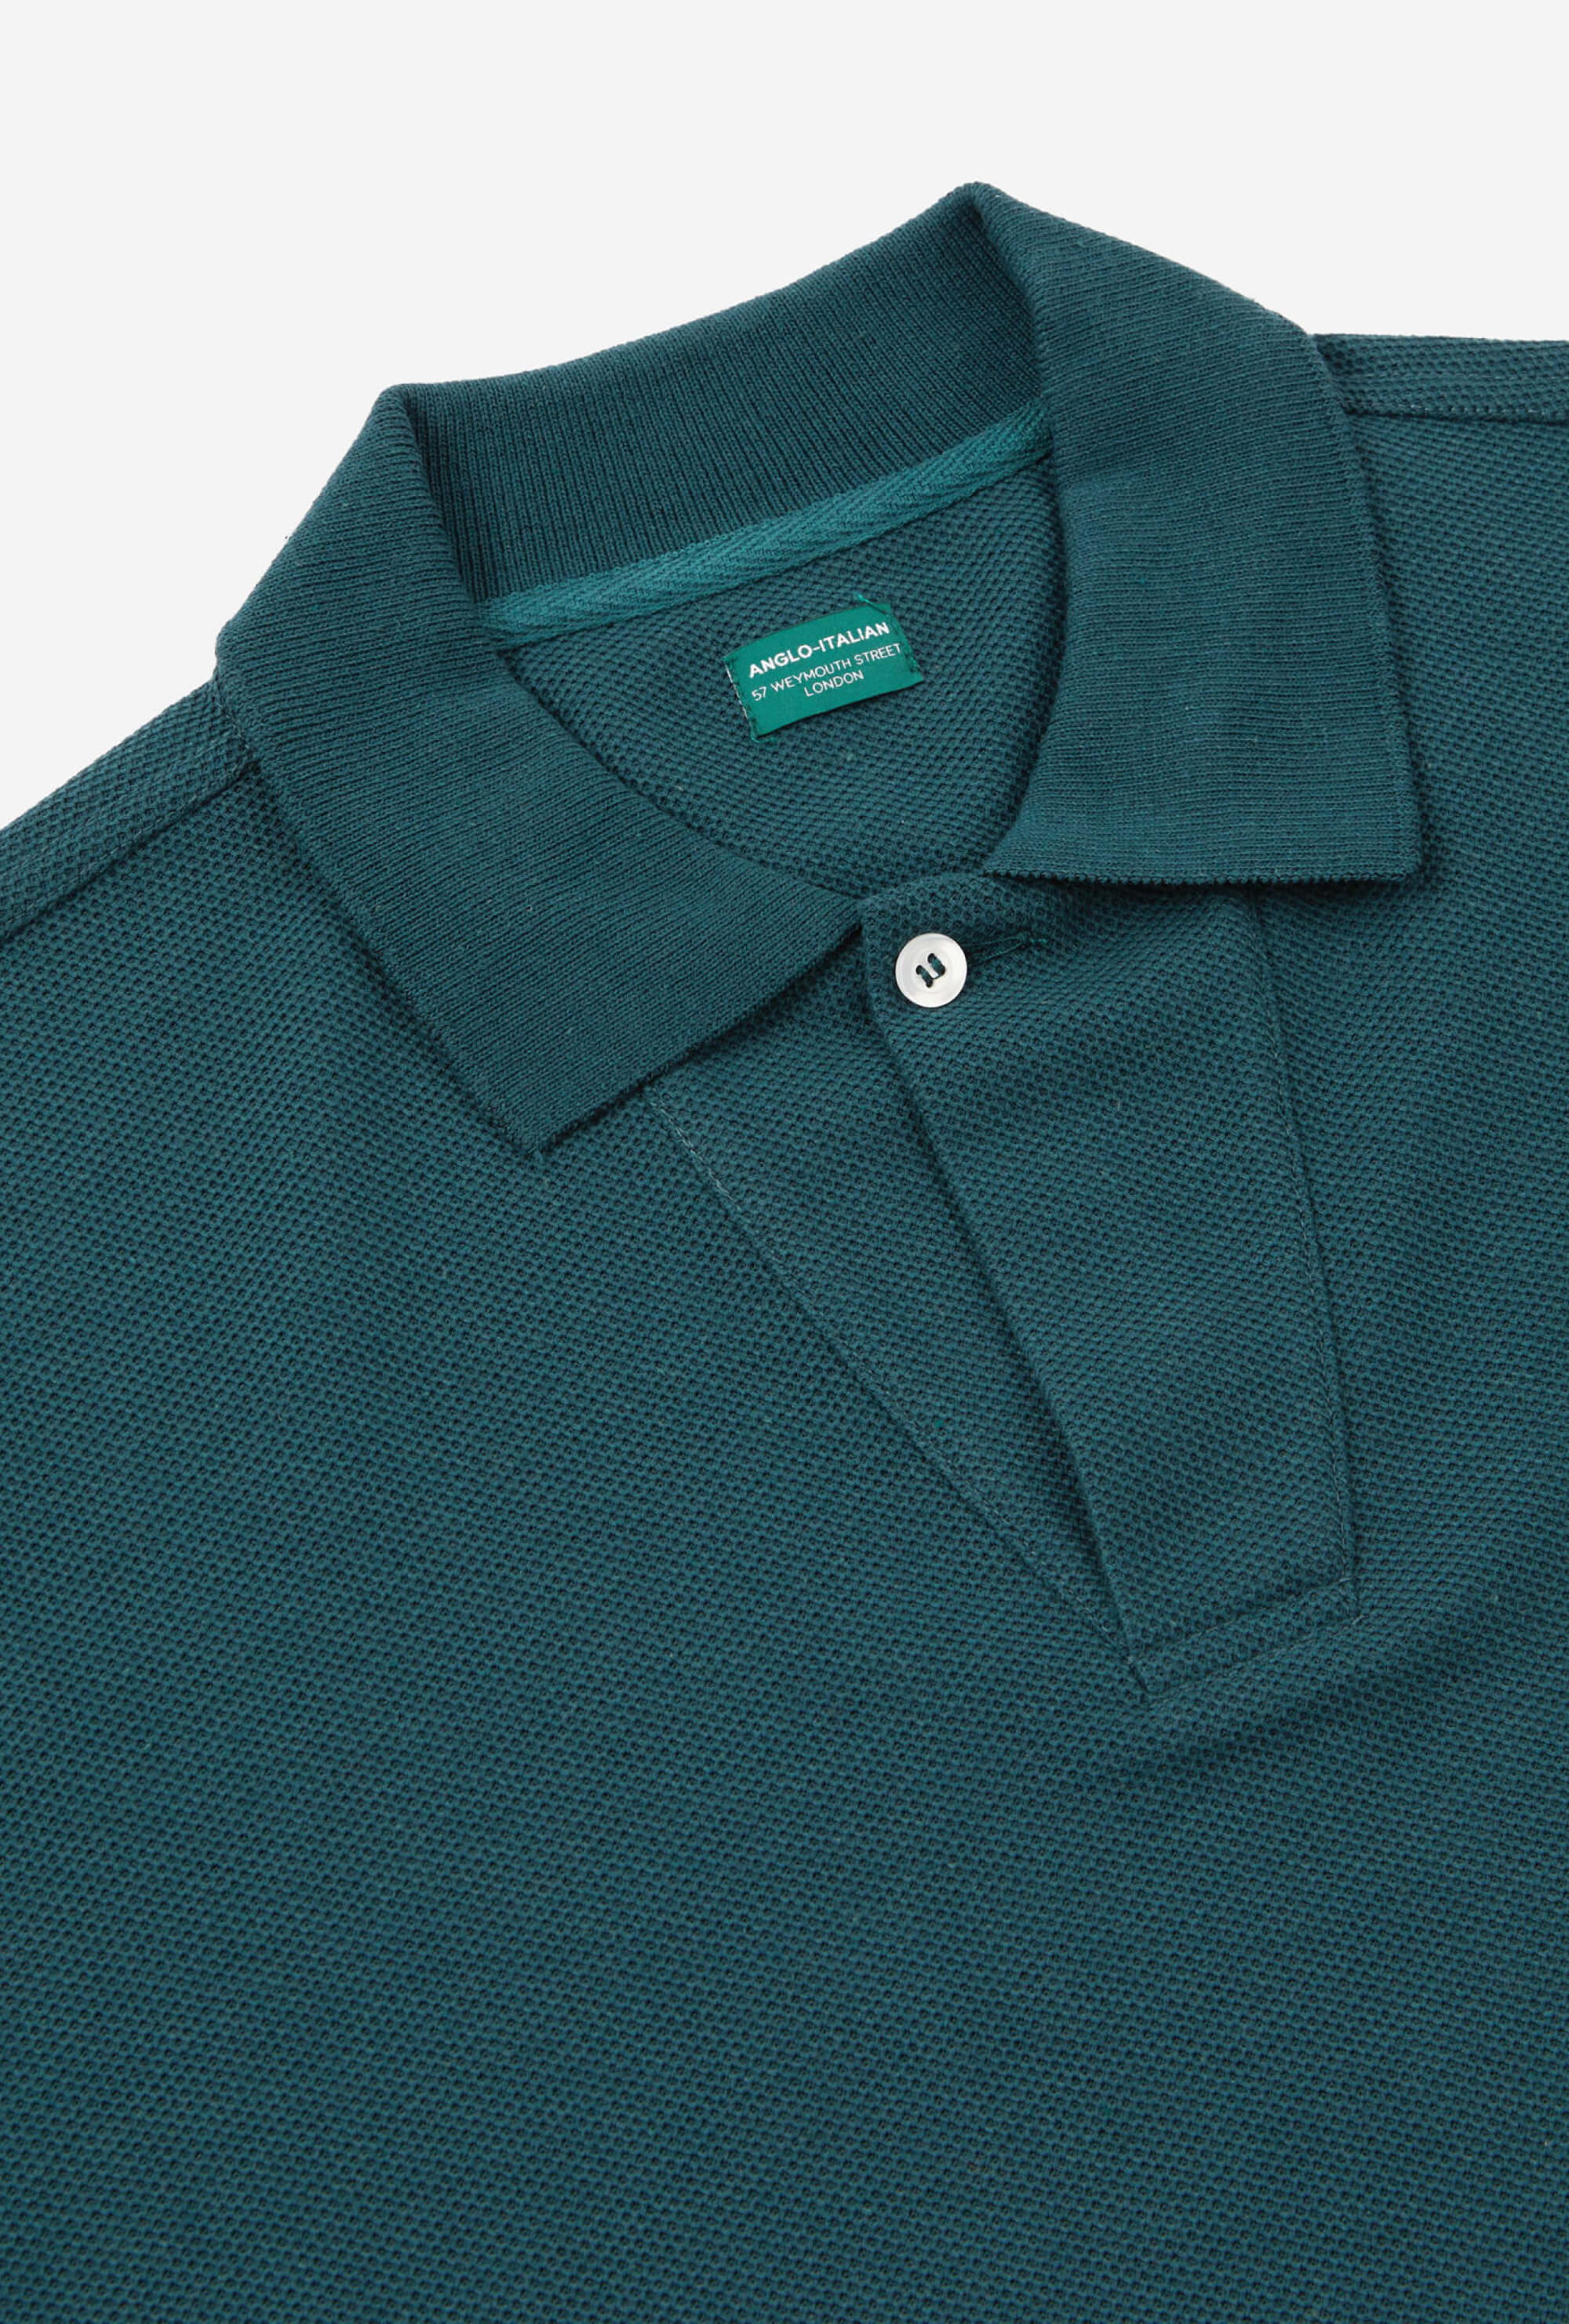 Sports Polo Long Sleeve Emerald